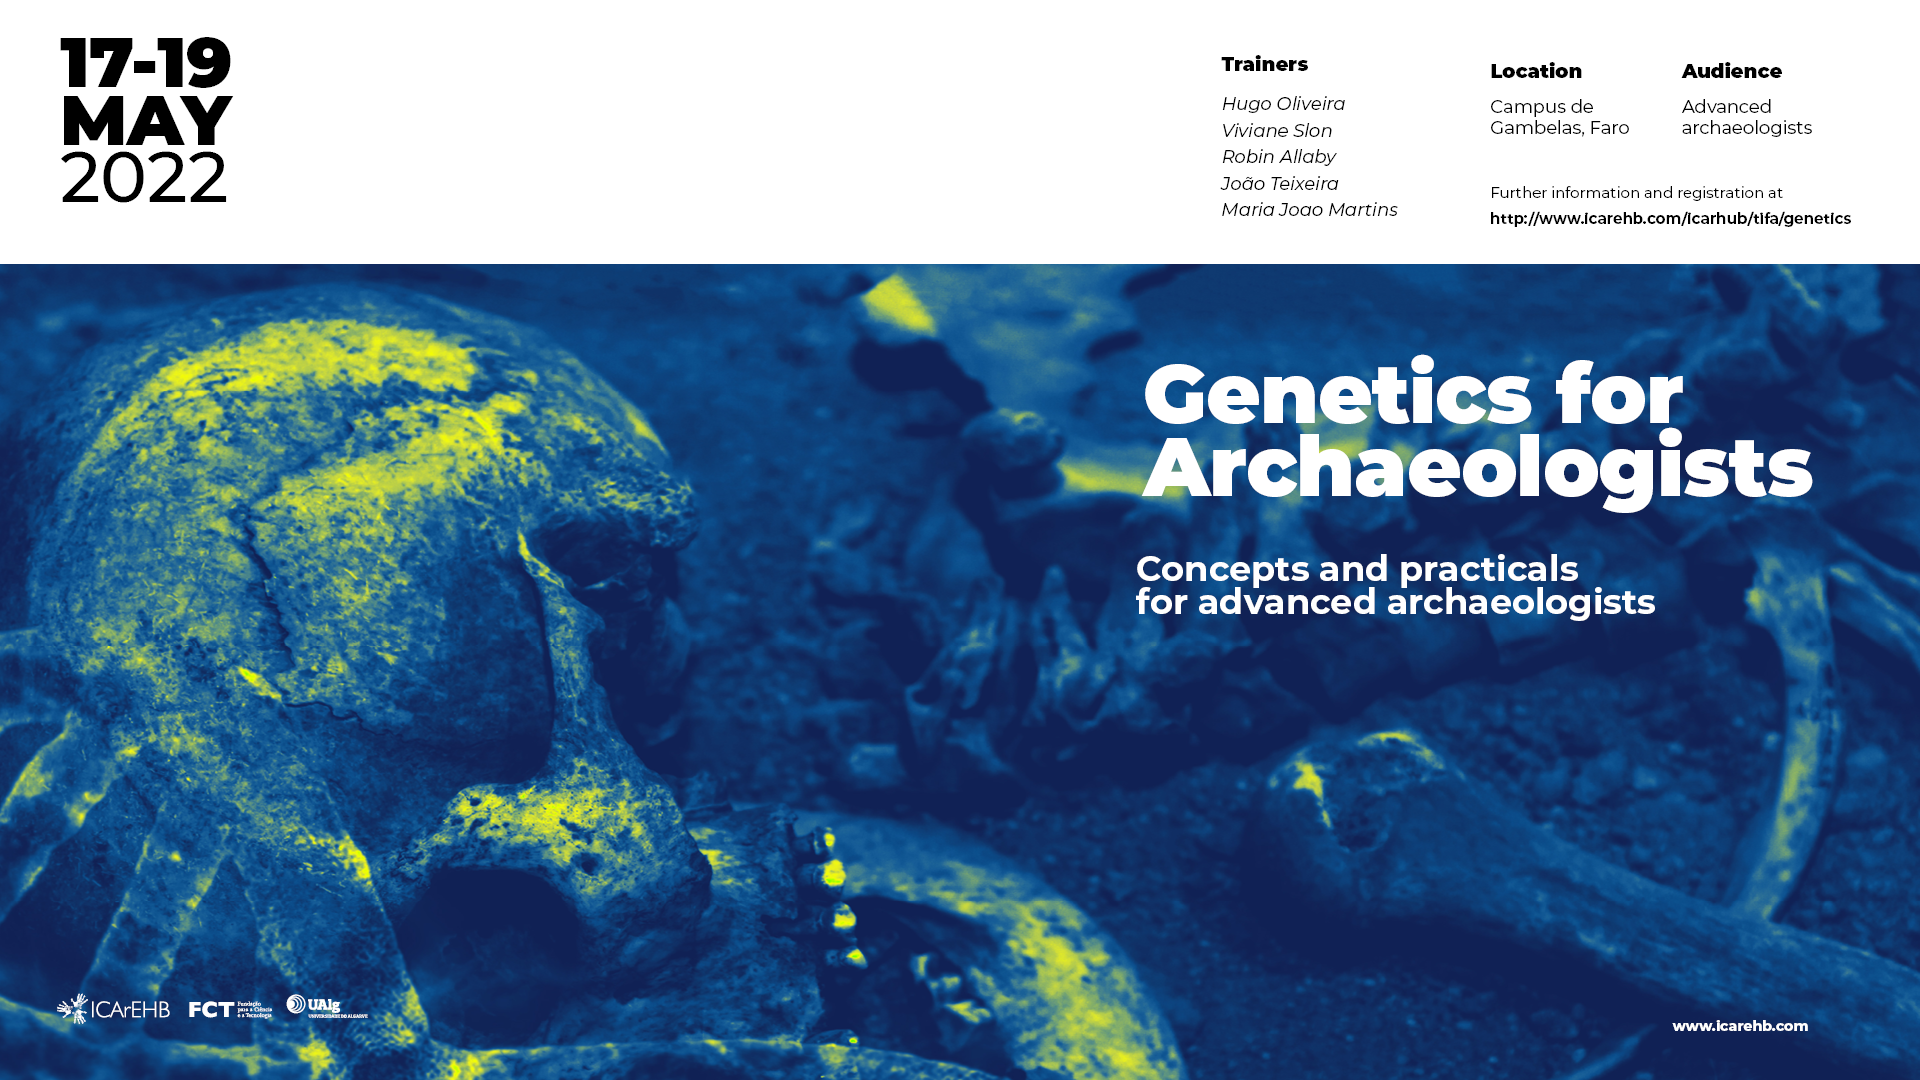 “Genetics for Archaeologists”